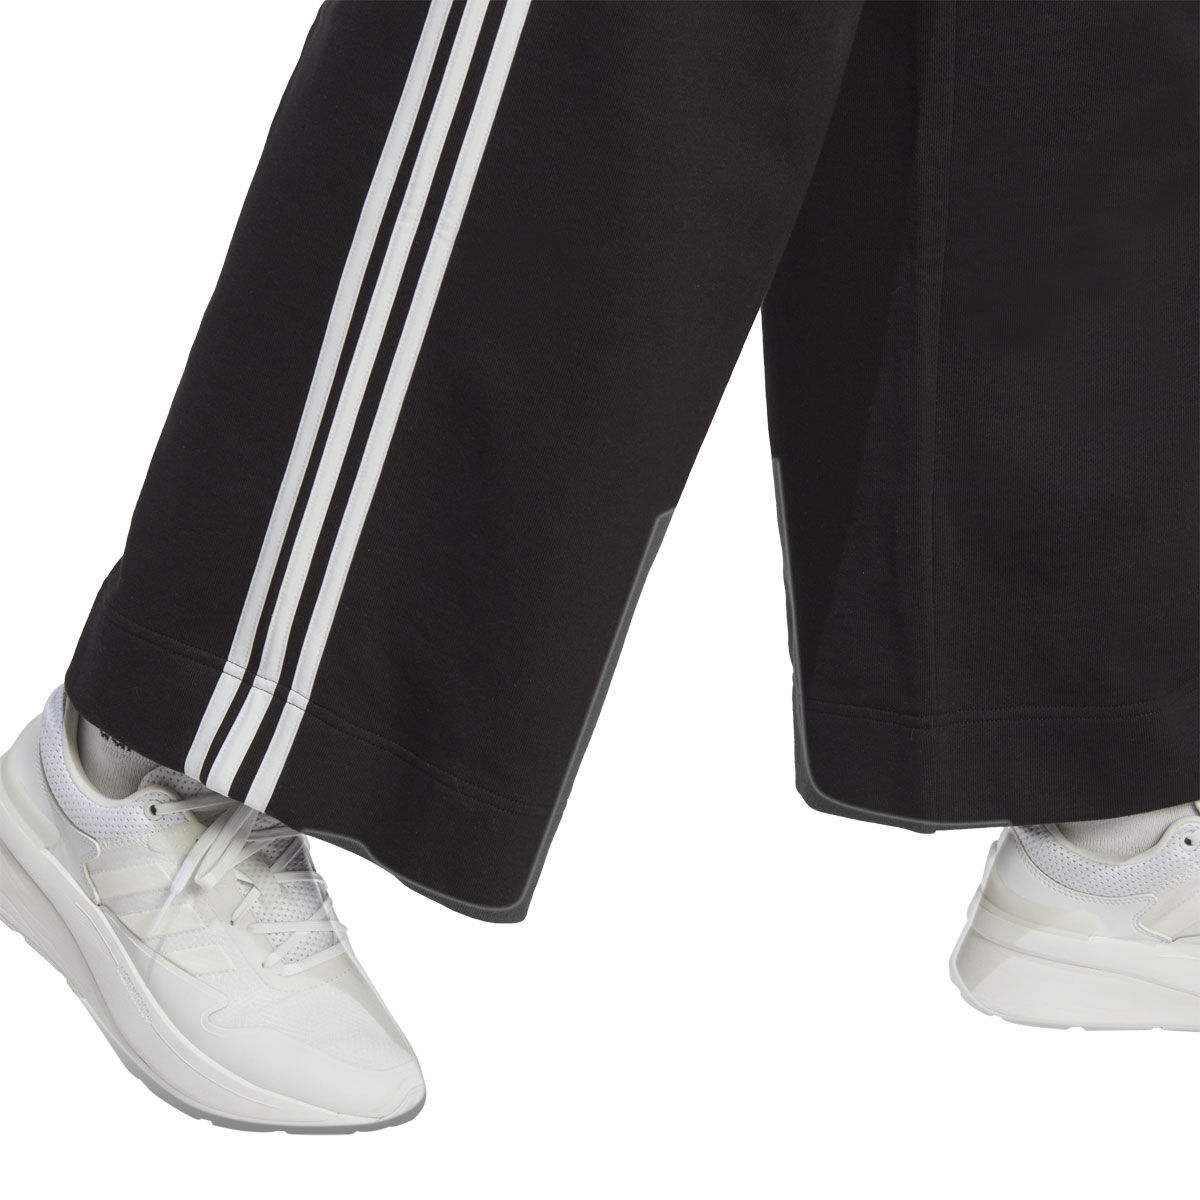 Adidas Pants Women's Size L Climacool Black and White APU008 D95958  Training | eBay